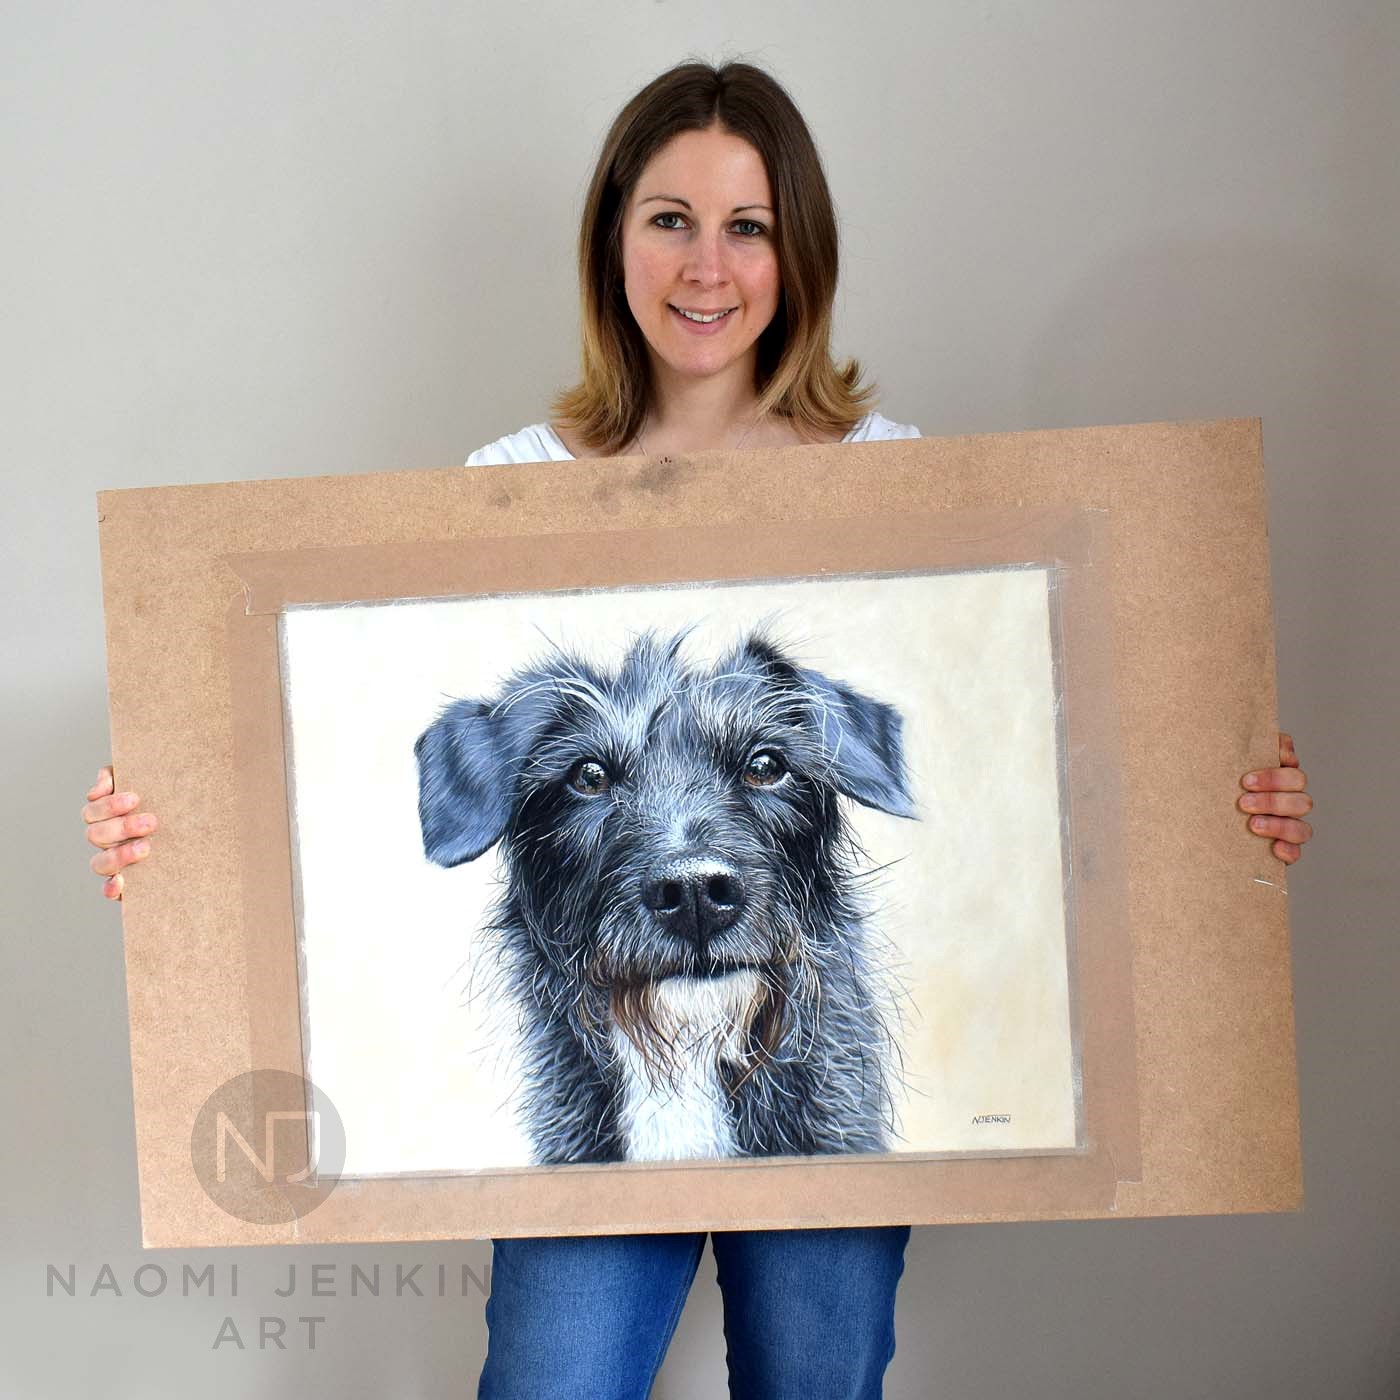 Pet portrait artist Naomi Jenkin